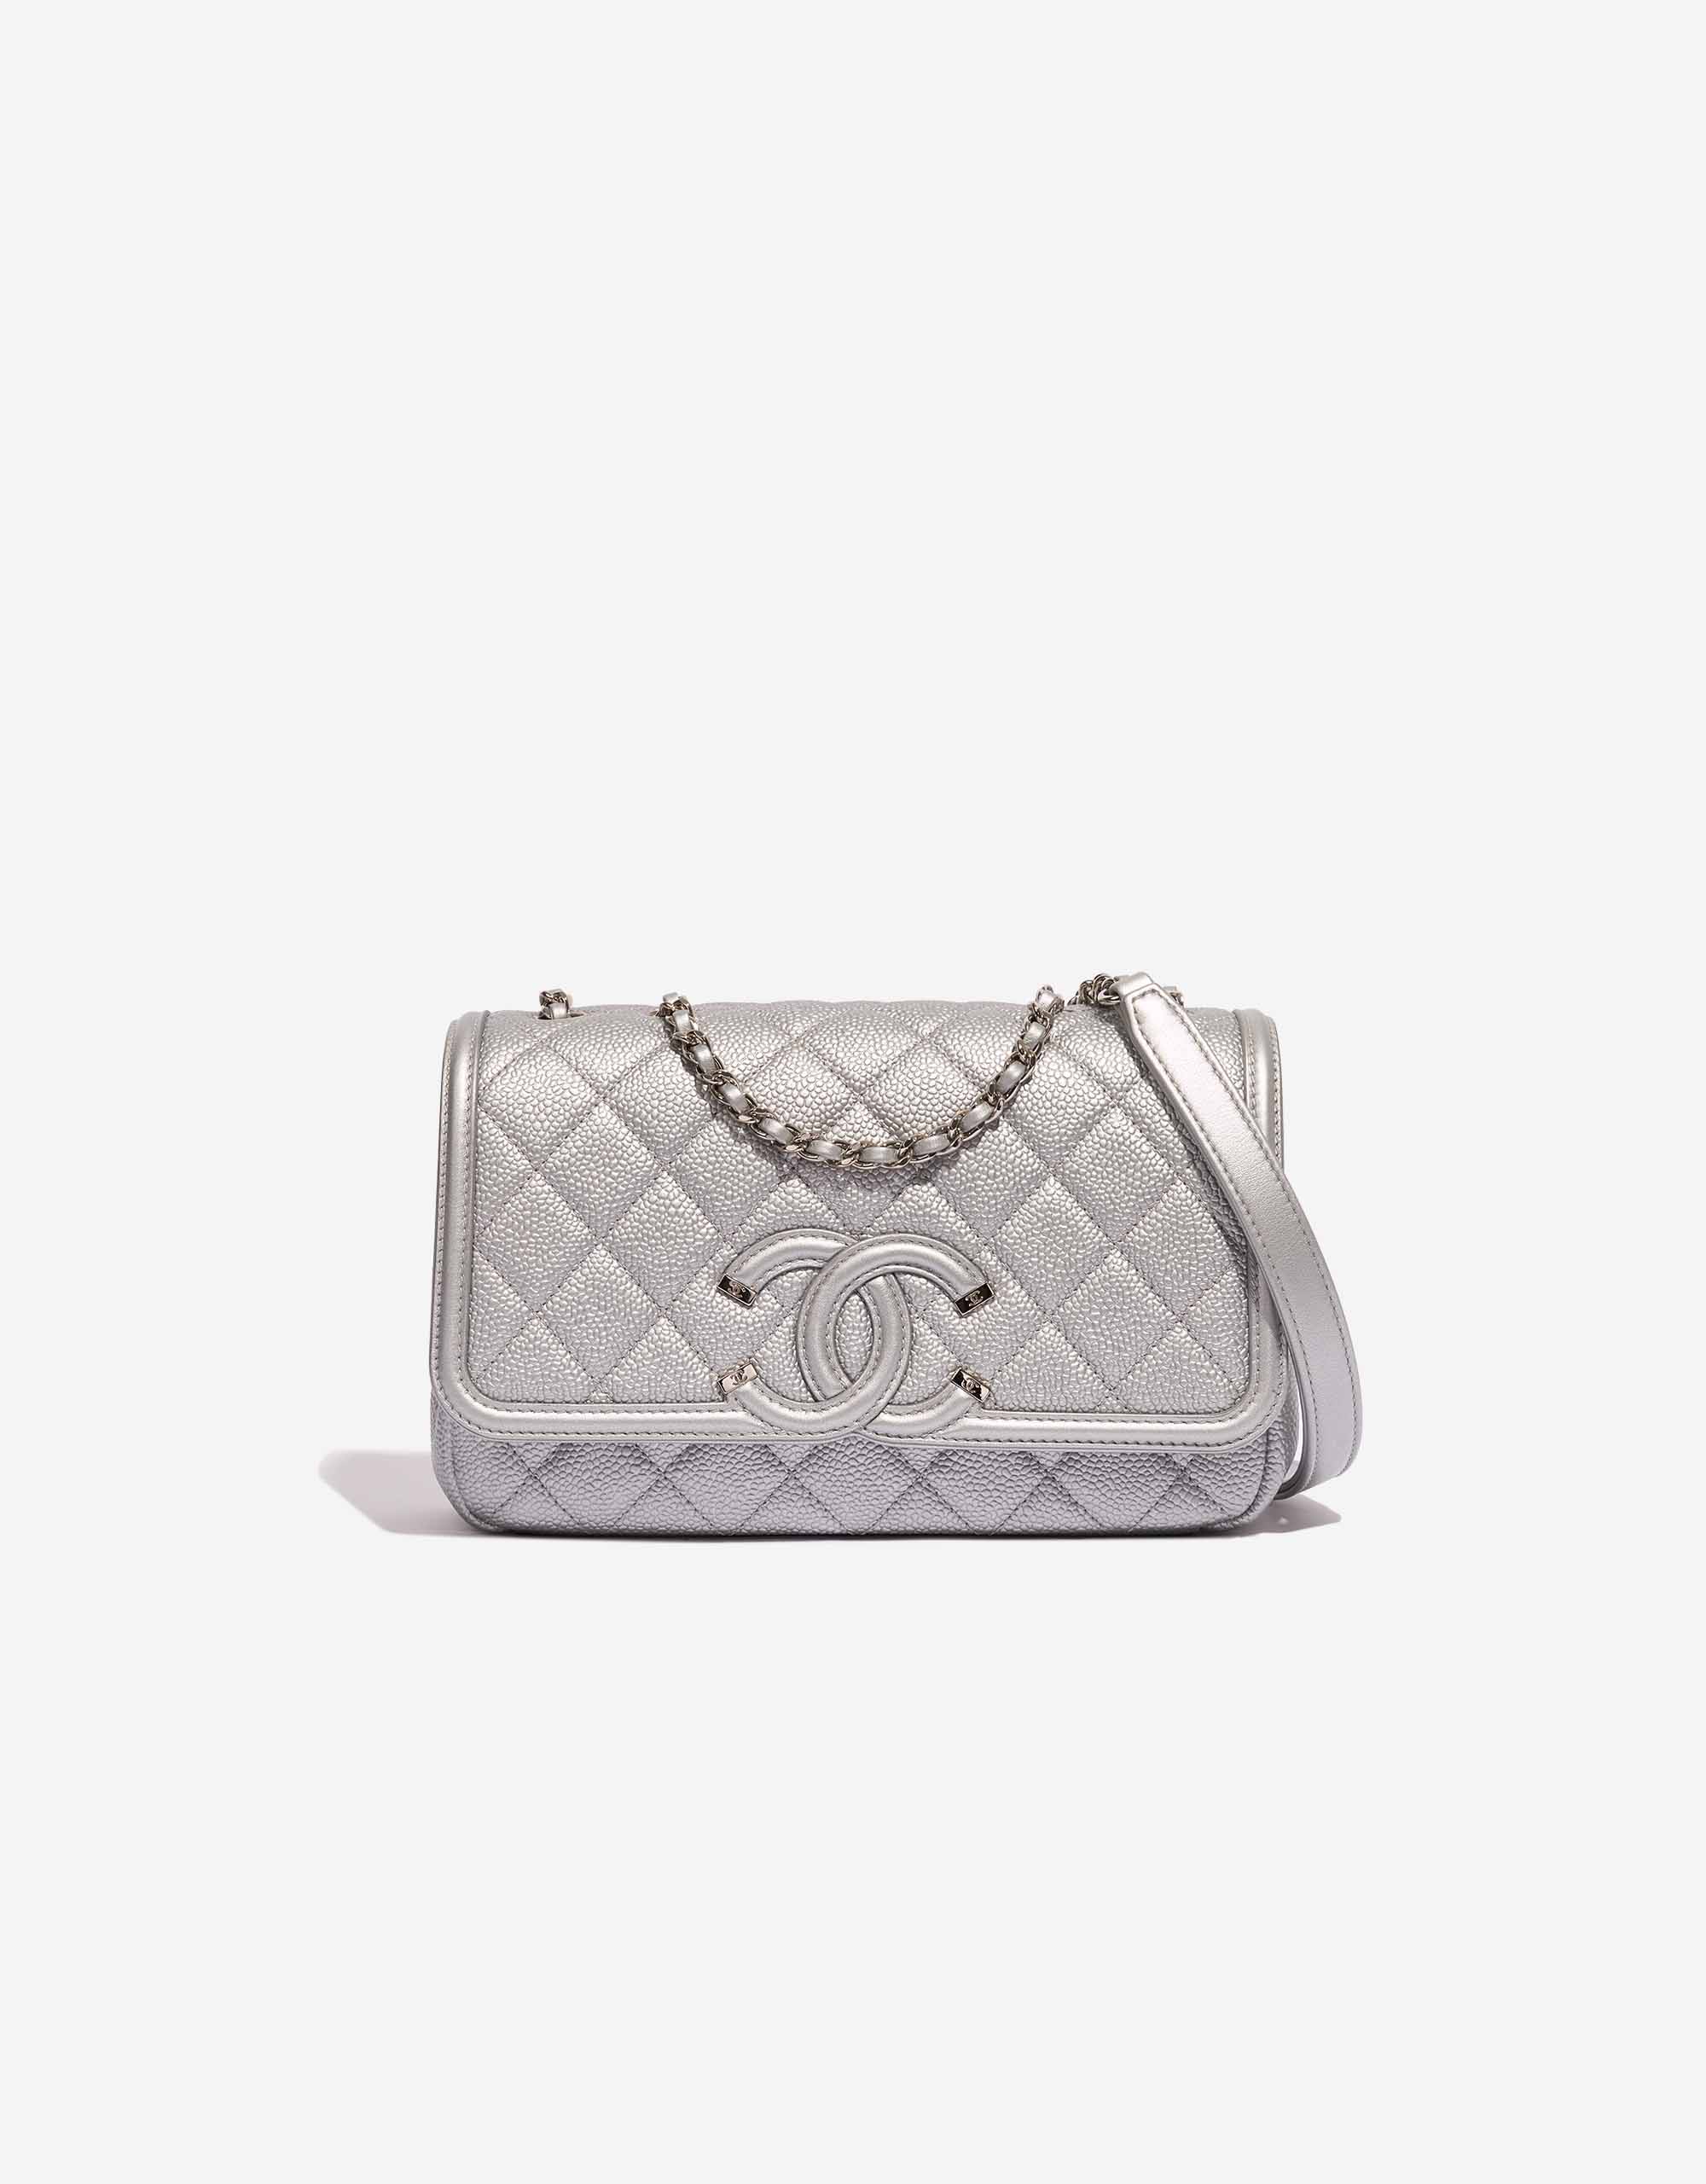 Chanel Filigree Caviar Silver CC Small Flap Bag